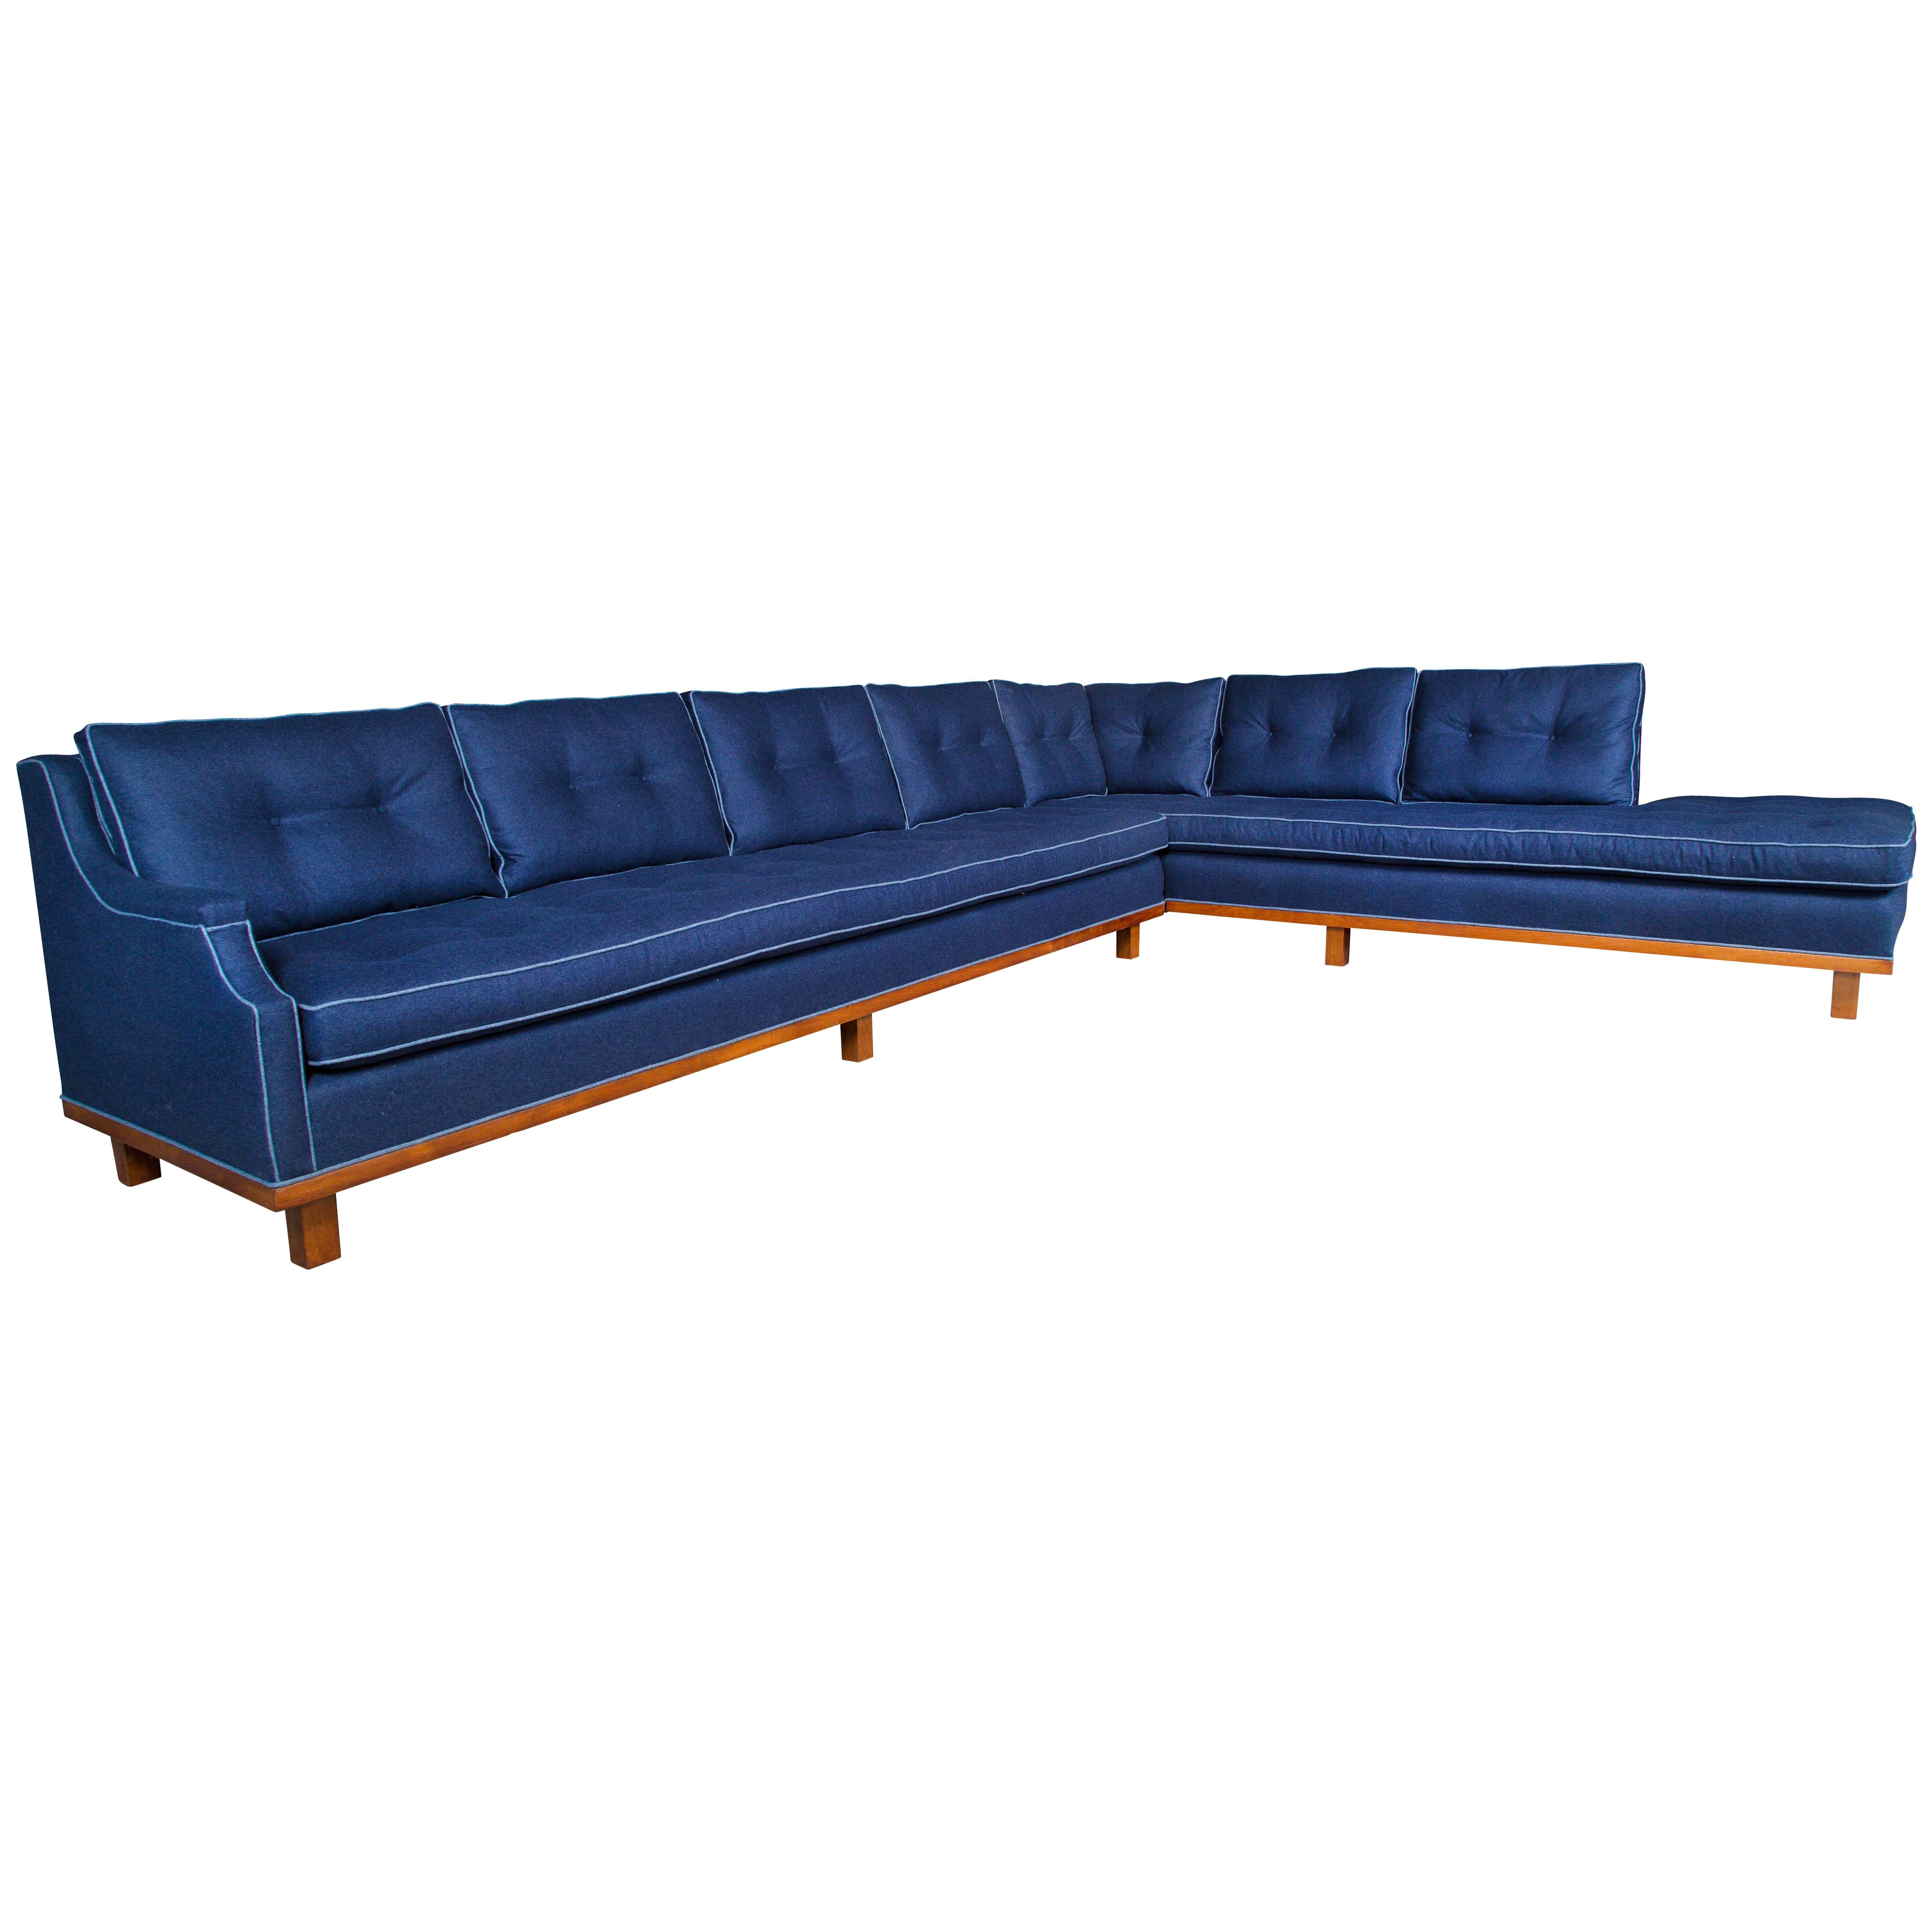 Vintage Dunbar Sectional Sofa